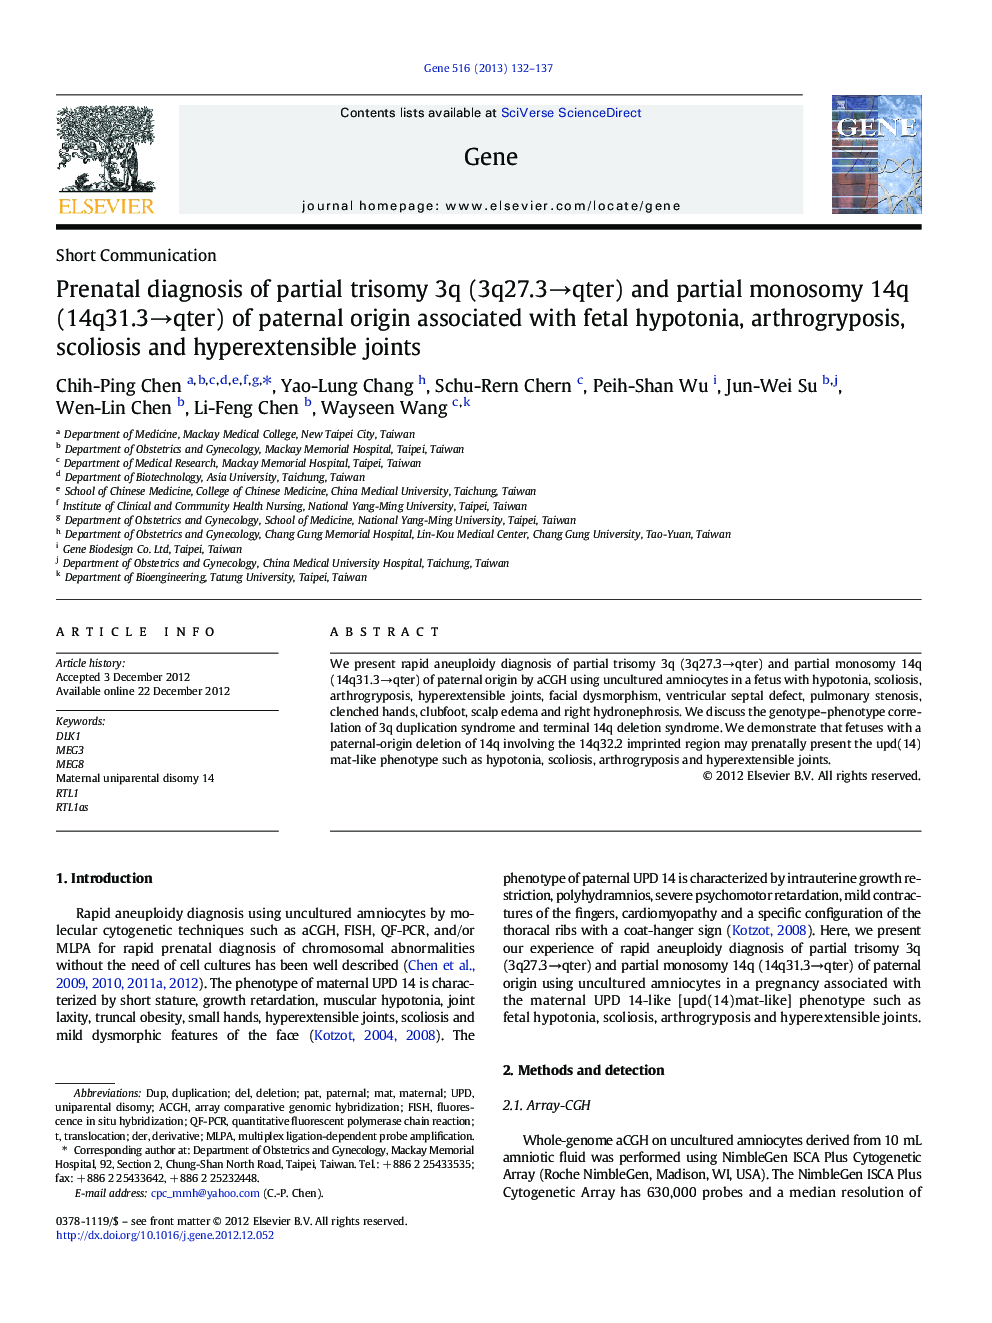 Short CommunicationPrenatal diagnosis of partial trisomy 3q (3q27.3âqter) and partial monosomy 14q (14q31.3âqter) of paternal origin associated with fetal hypotonia, arthrogryposis, scoliosis and hyperextensible joints